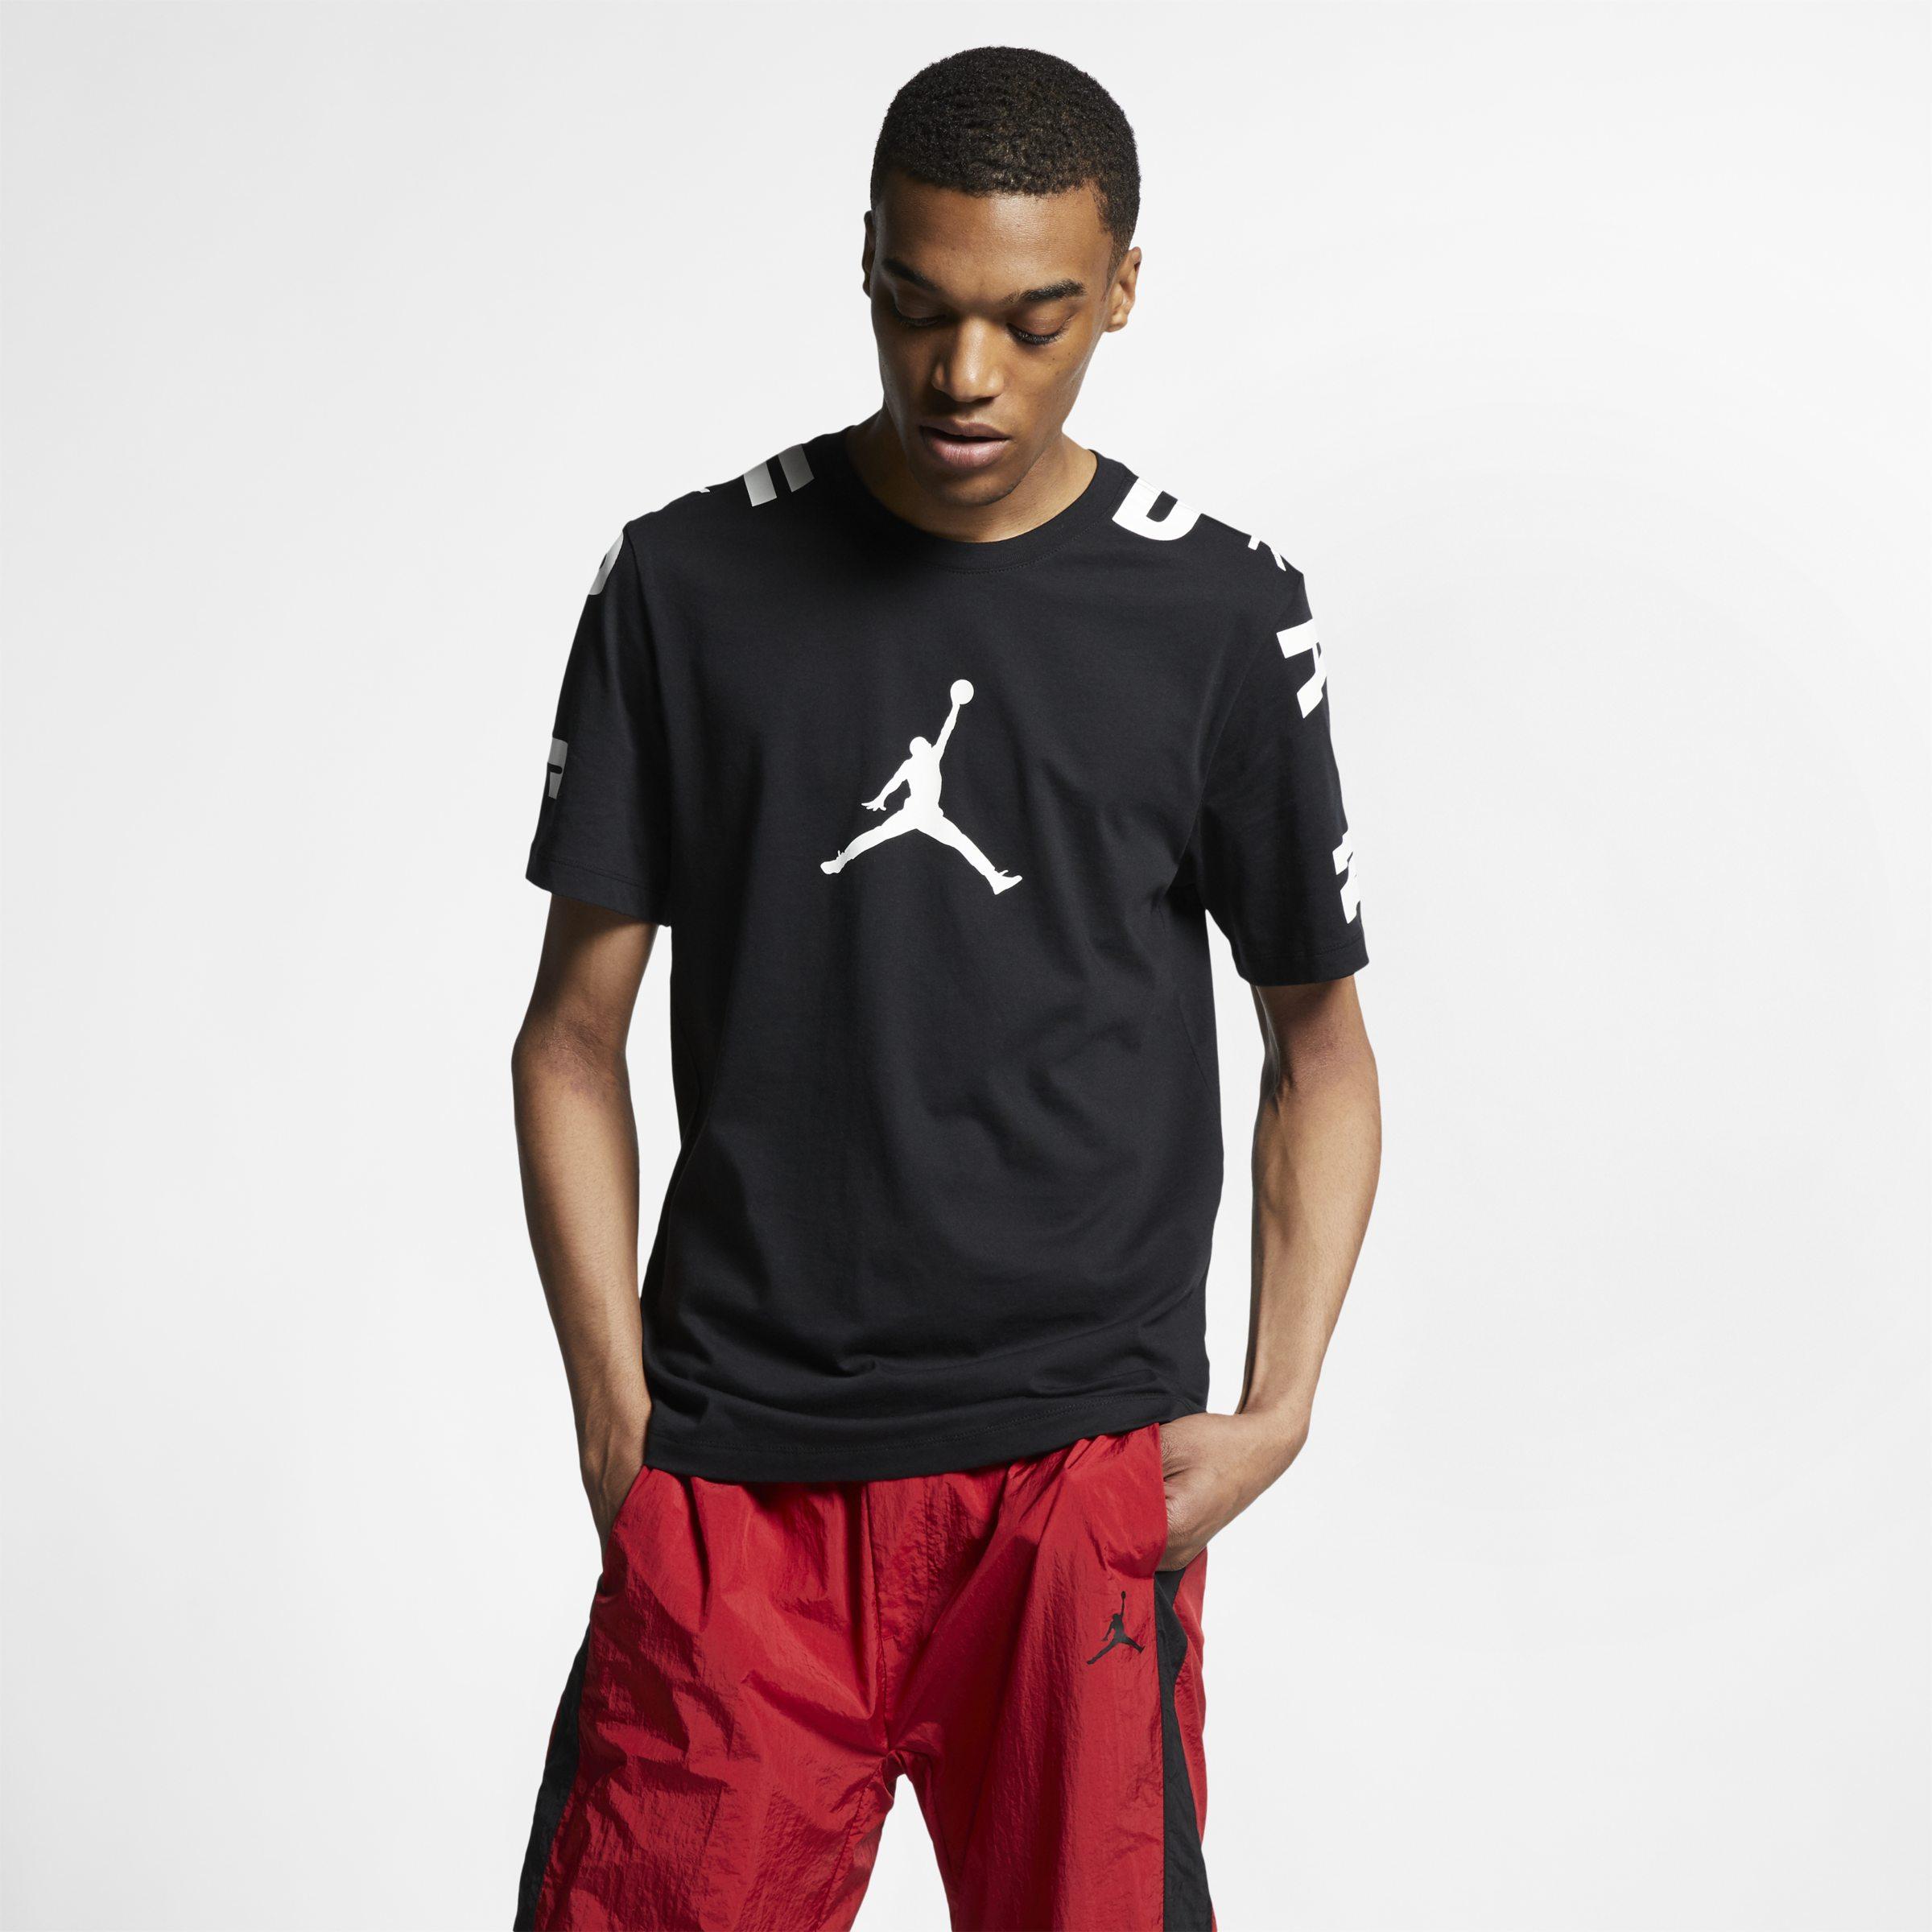 Nike Jordan Stretch 23 T-shirt in Black for Men - Lyst